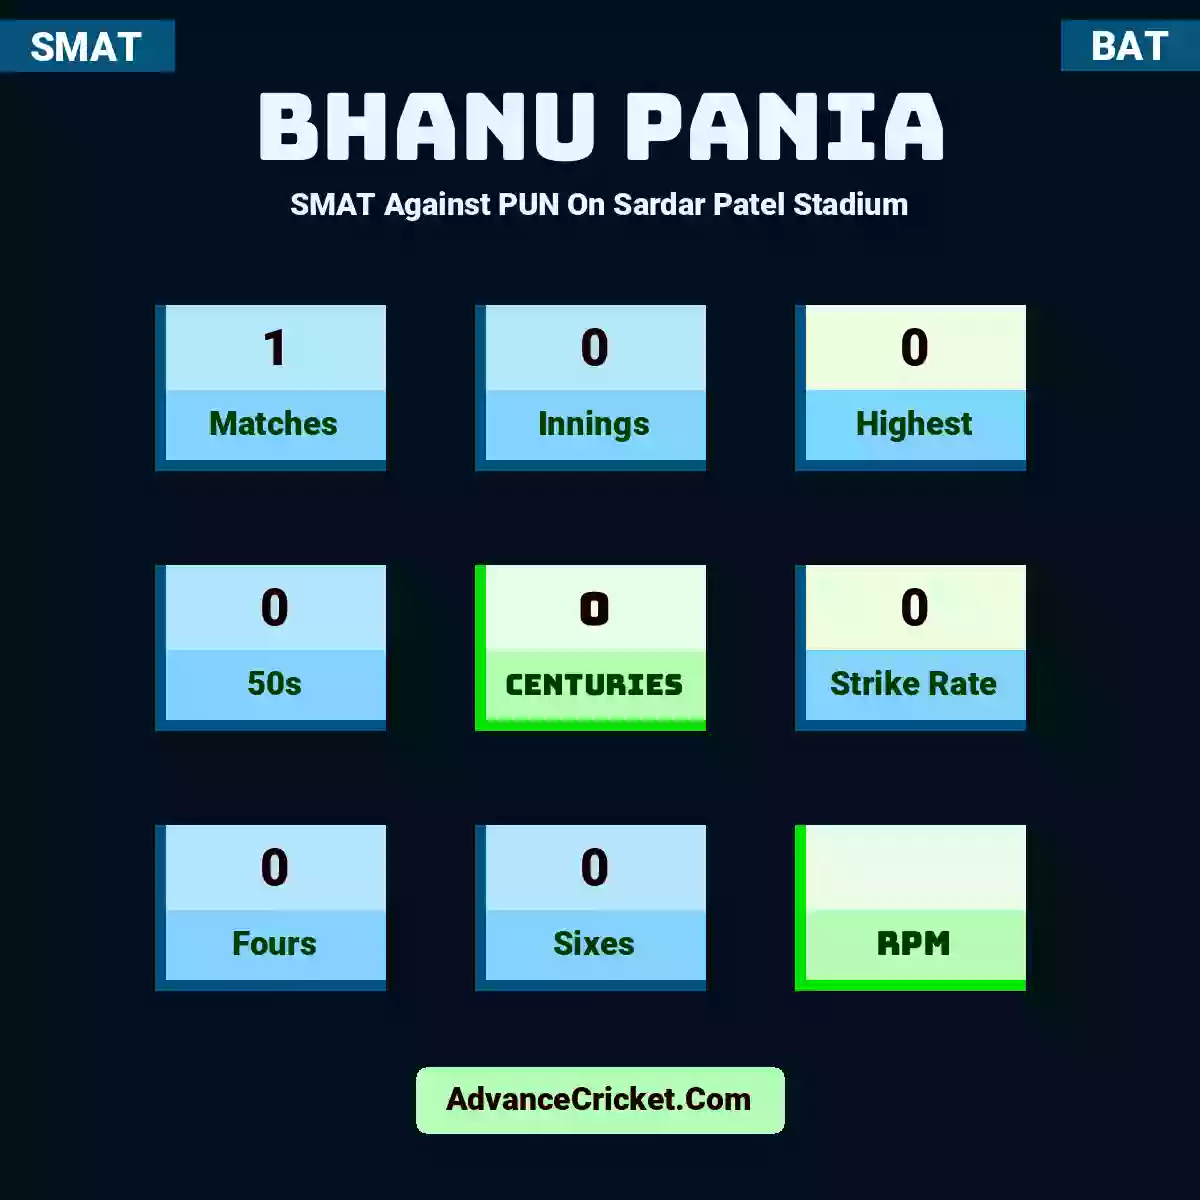 Bhanu Pania SMAT  Against PUN On Sardar Patel Stadium, Bhanu Pania played 1 matches, scored 0 runs as highest, 0 half-centuries, and 0 centuries, with a strike rate of 0. B.Pania hit 0 fours and 0 sixes.